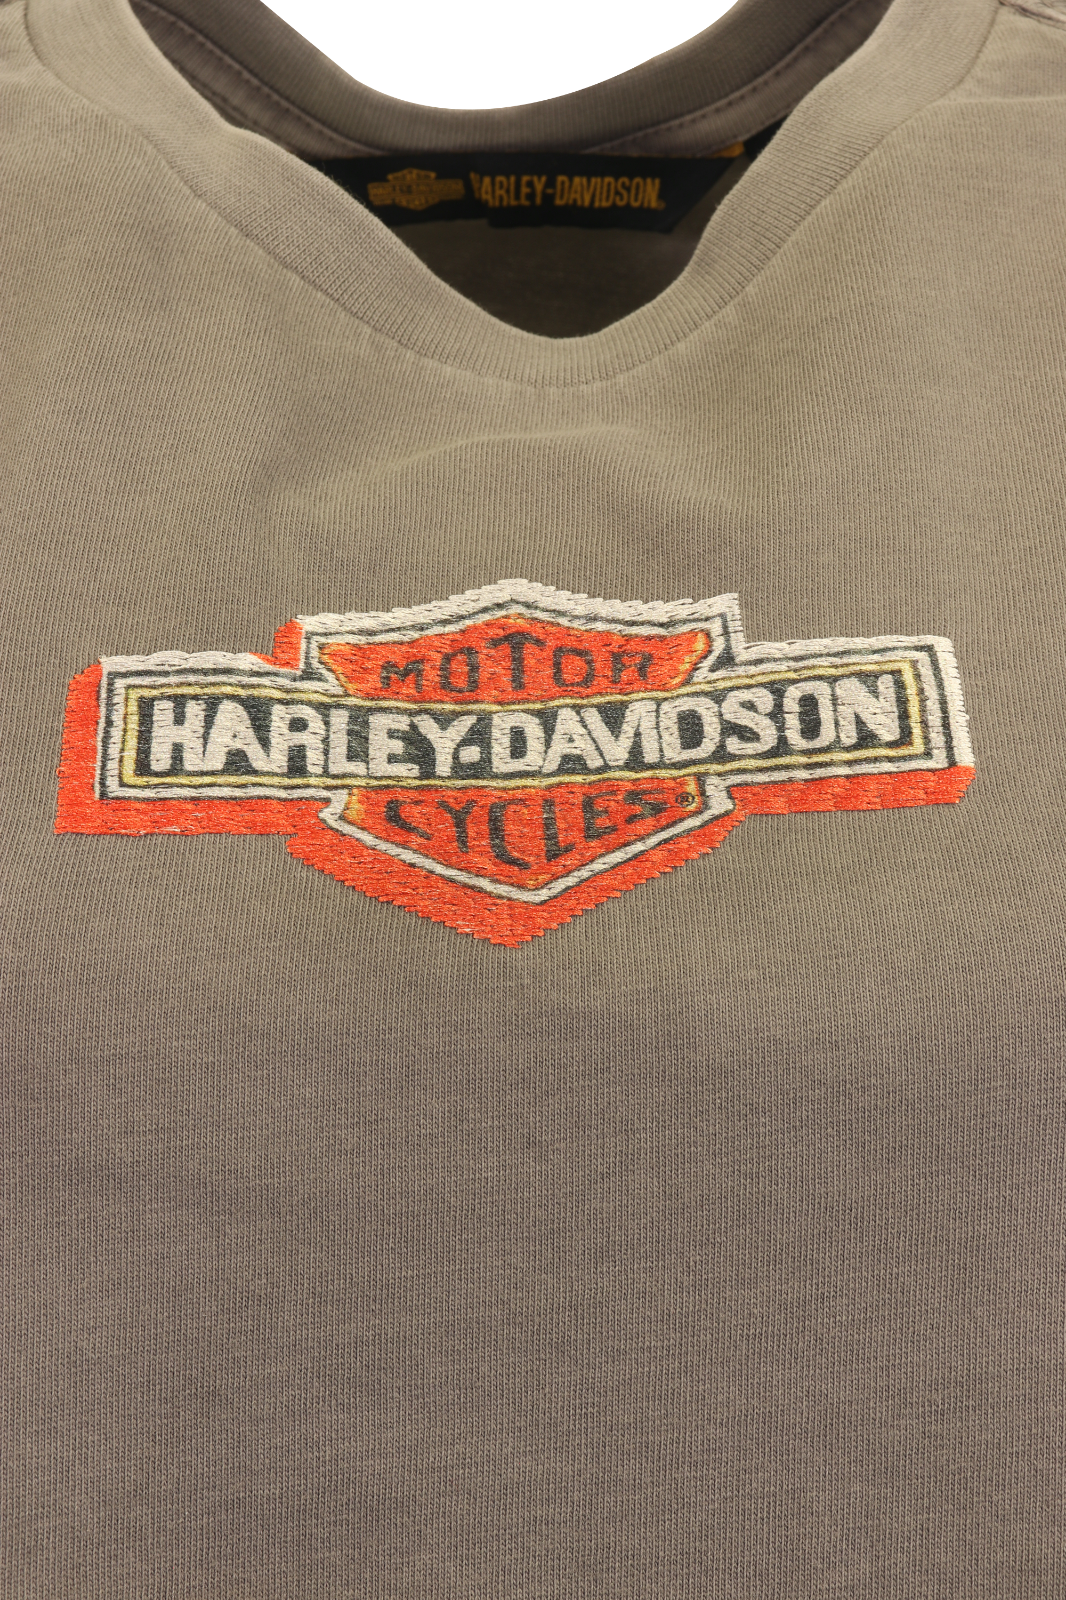 Harley-Davidson Women's Tank Top Grey Orange Embroidered Badge (S04)